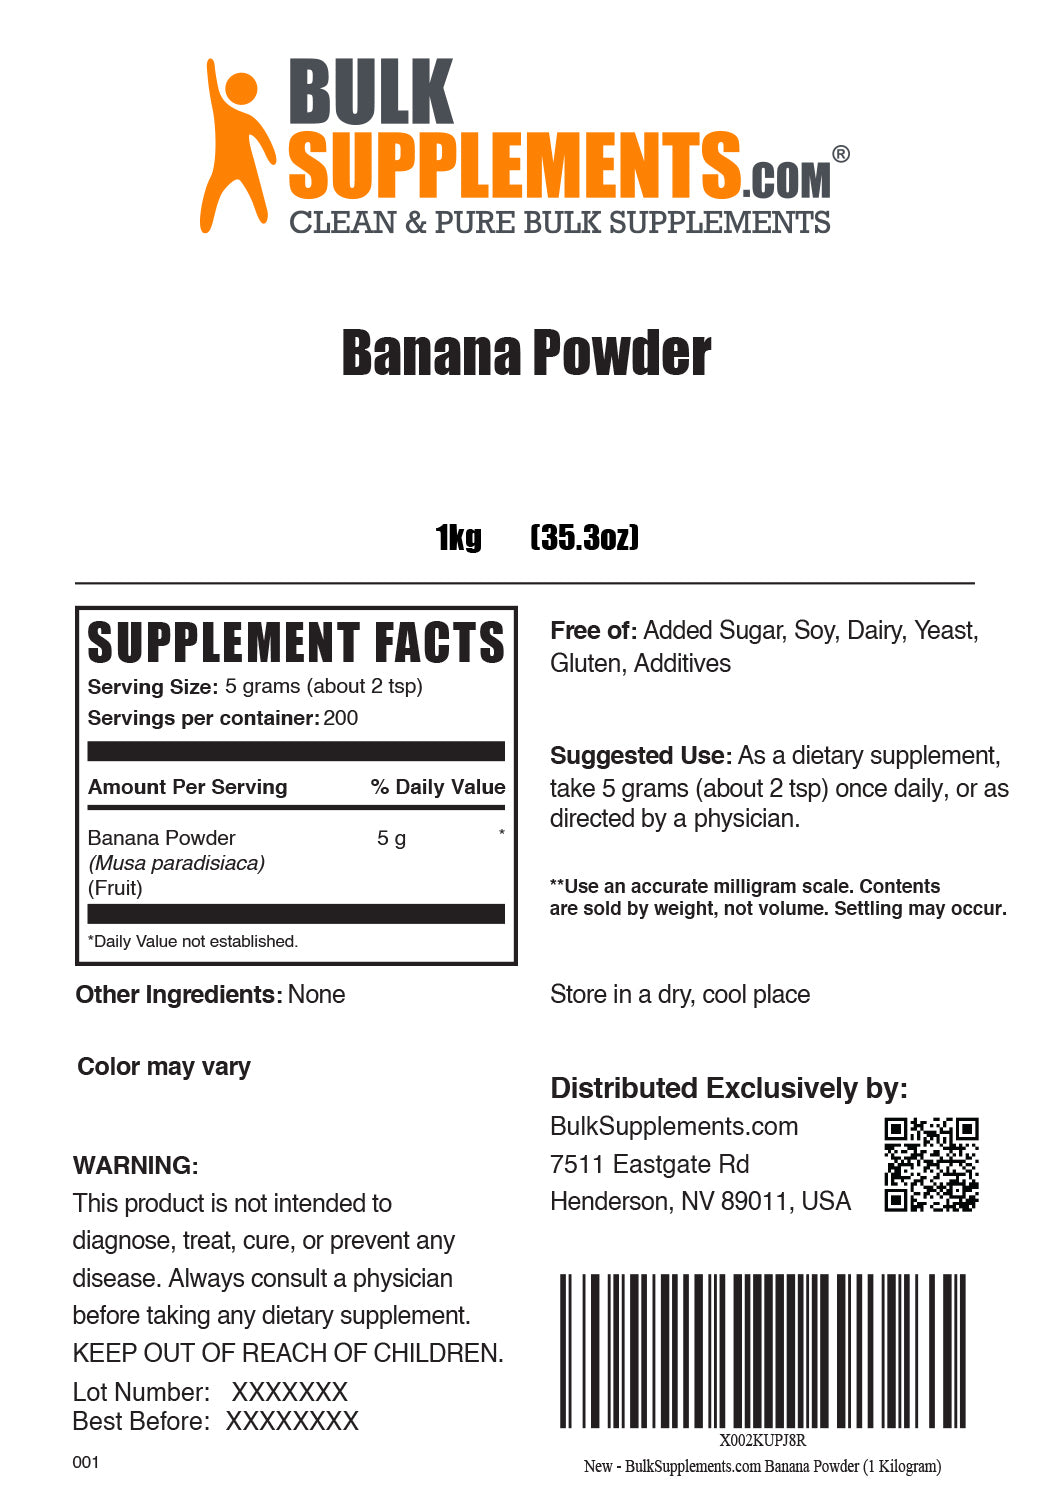 Banana Powder Supplement Facts for 1kg bag